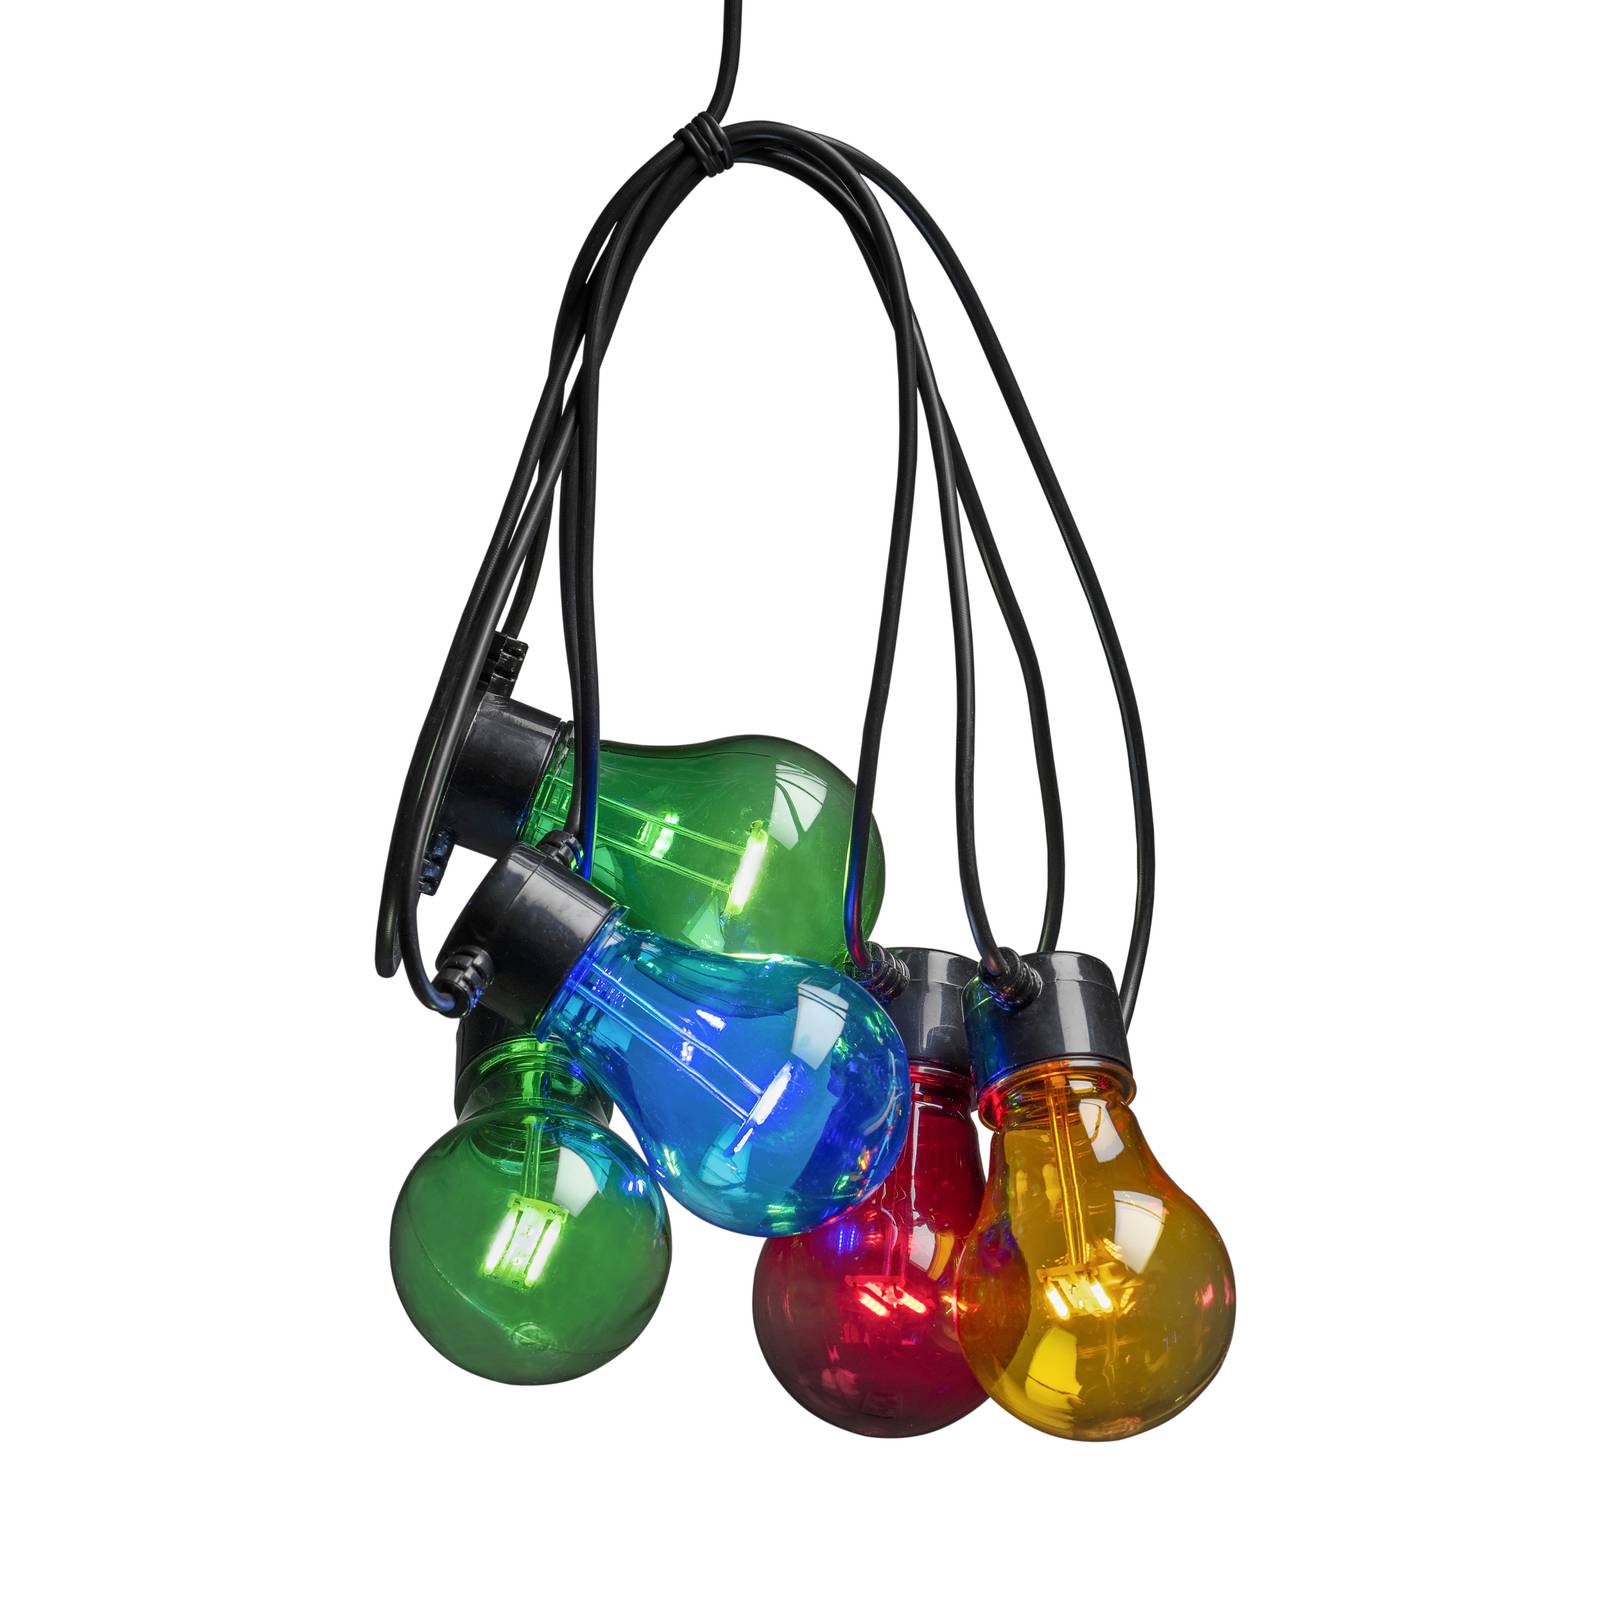 Konstsmide Christmas LED-Lichterkette Biergarten Basis-Set, bunt